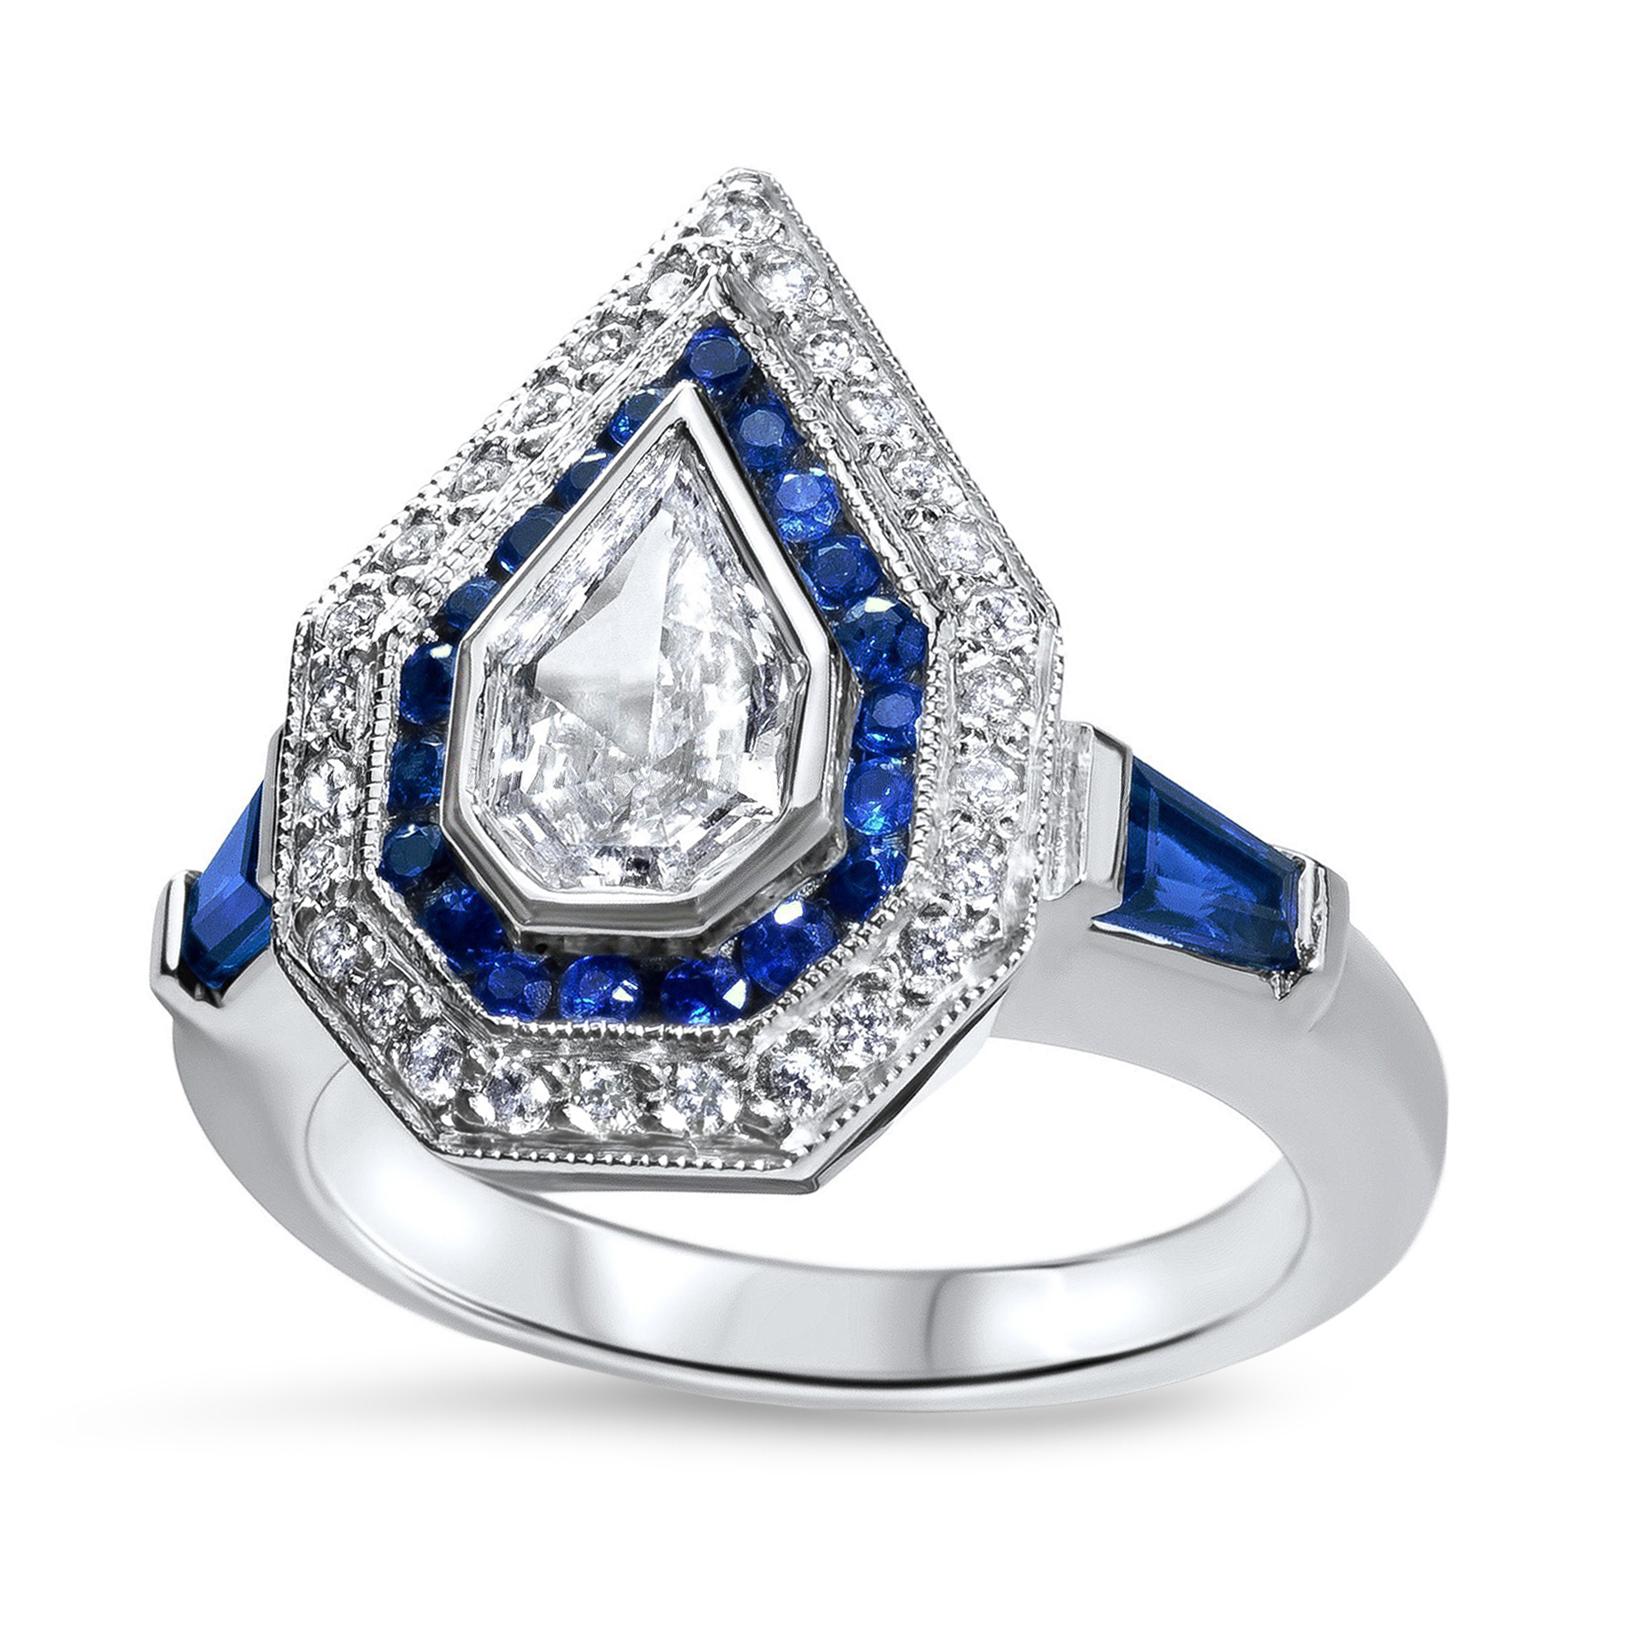 Women's Julie Romanenko Art Deco Inspired Fancy Kite Diamond Blue Sapphire Gold Ring